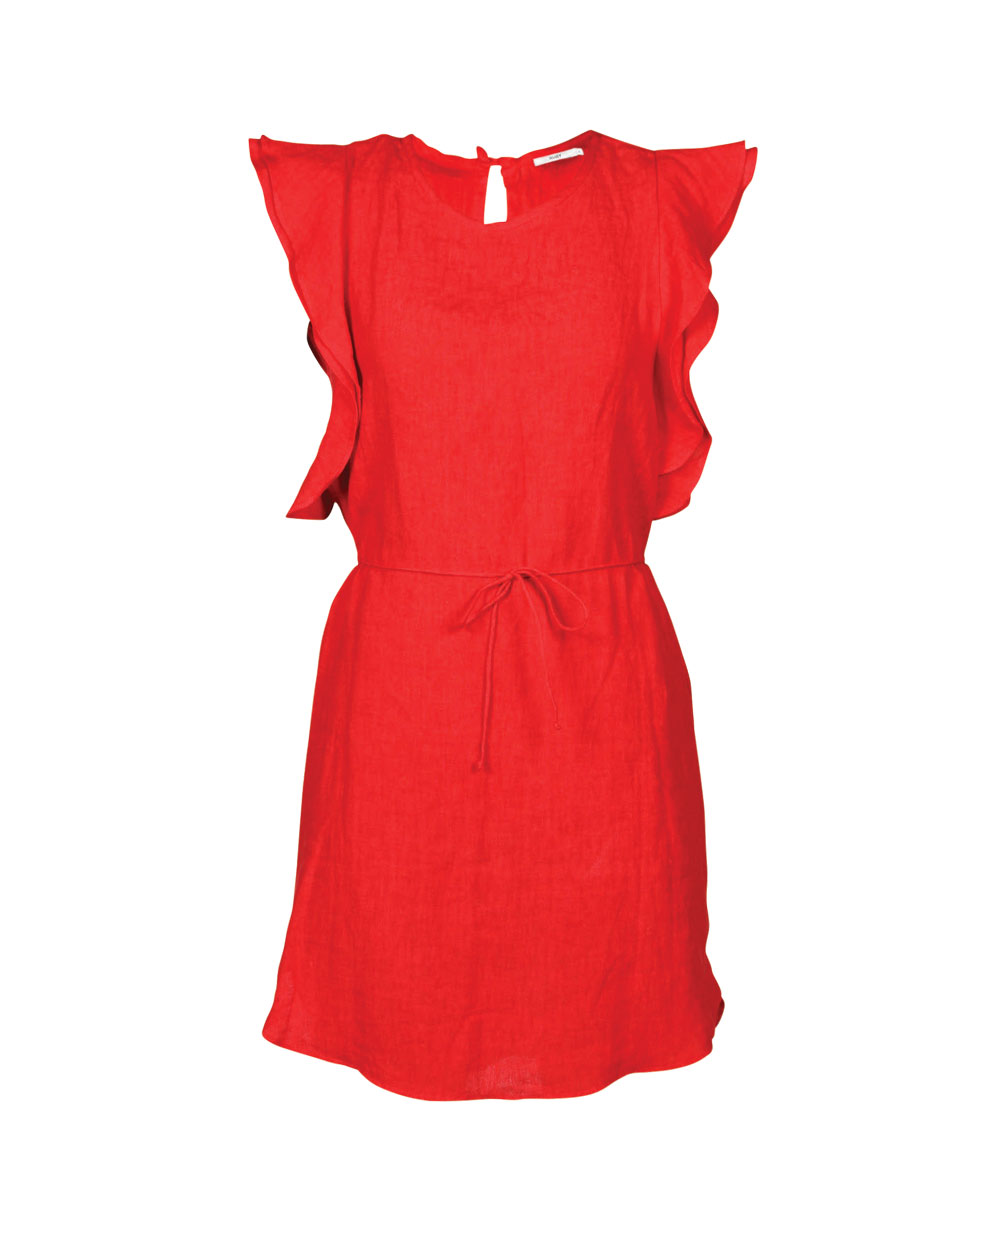 Ruby dress, $229